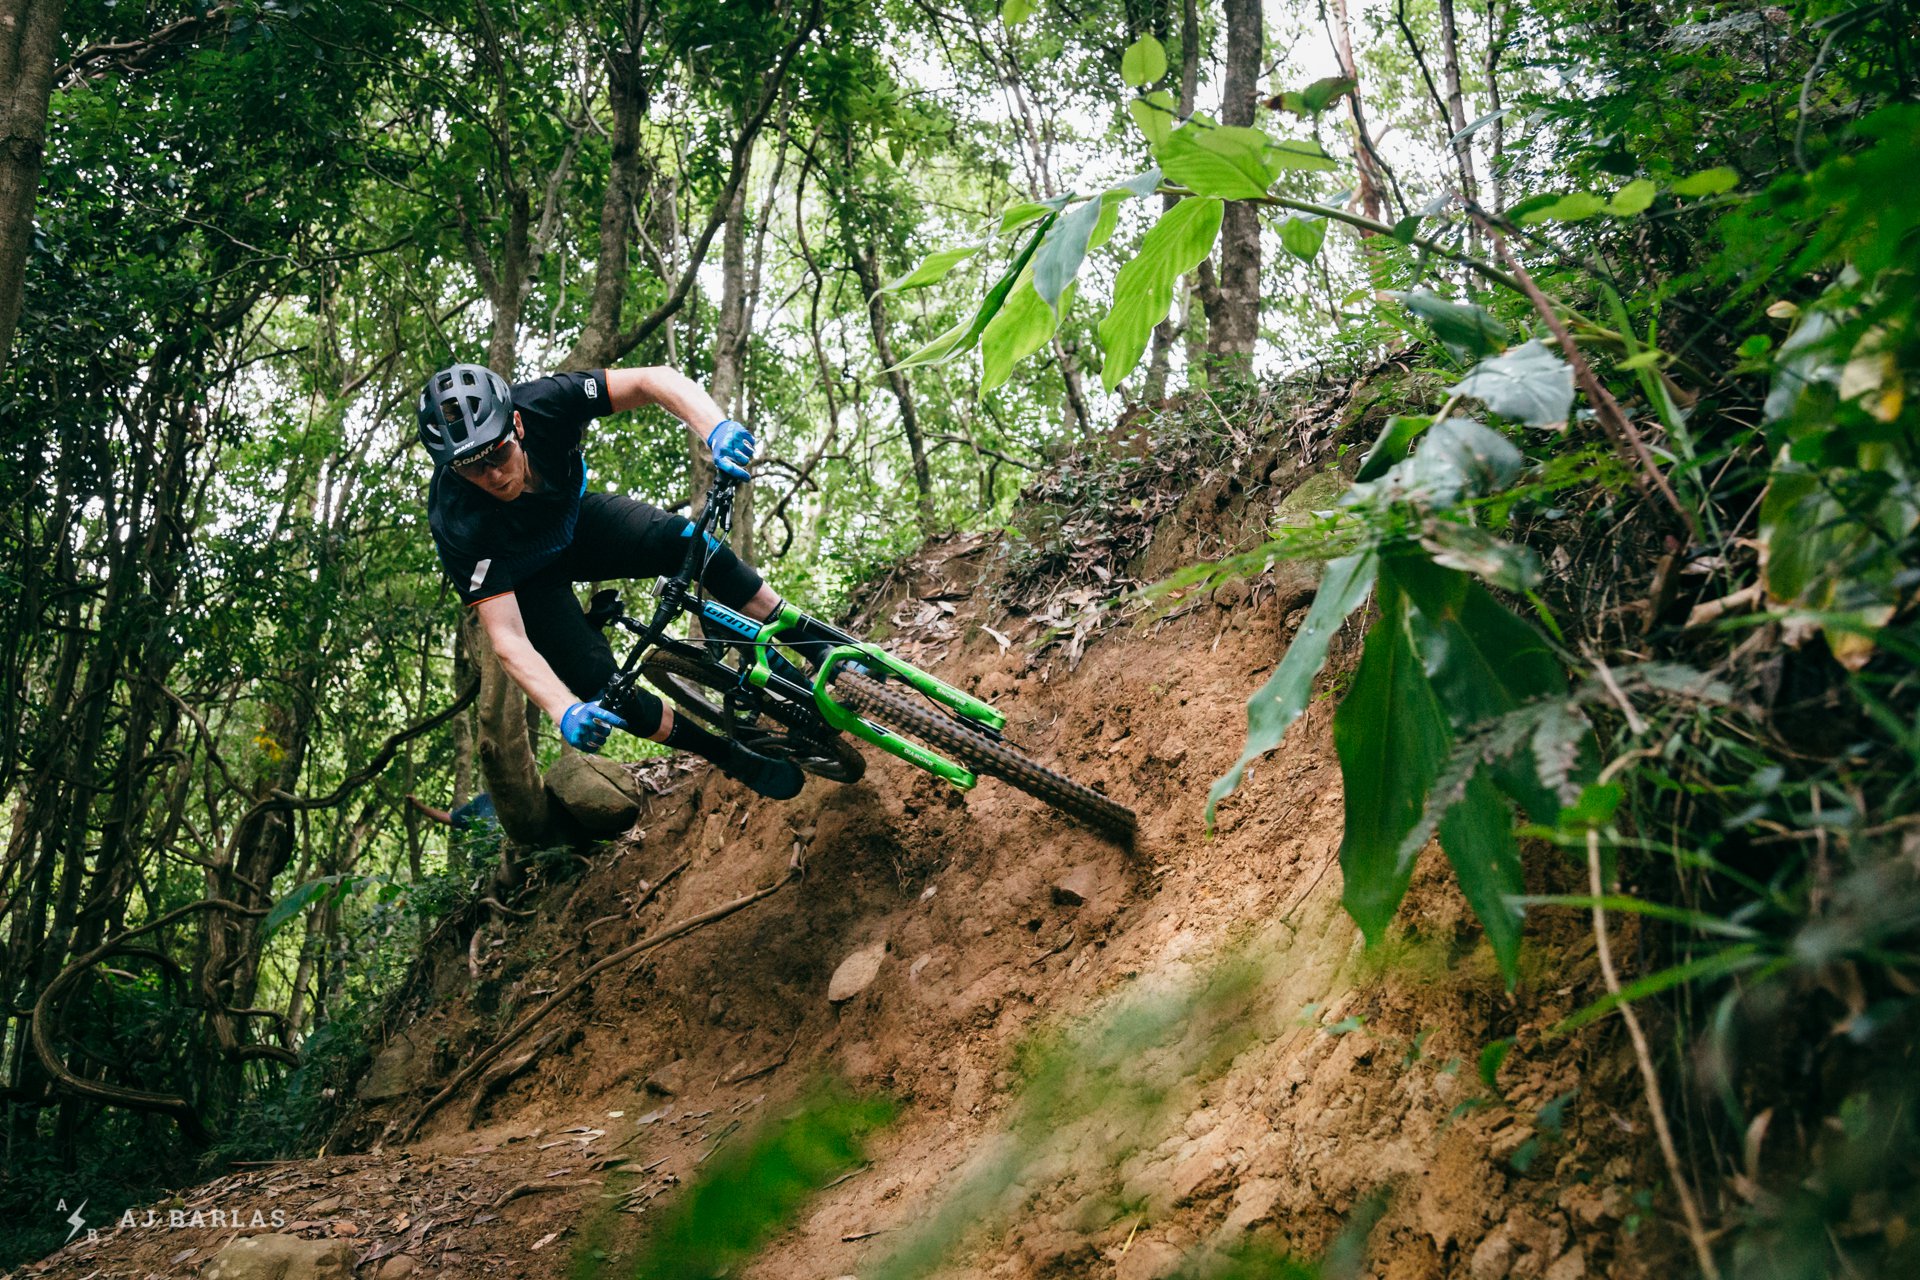 Josh Carlson riding high on Mount Keira